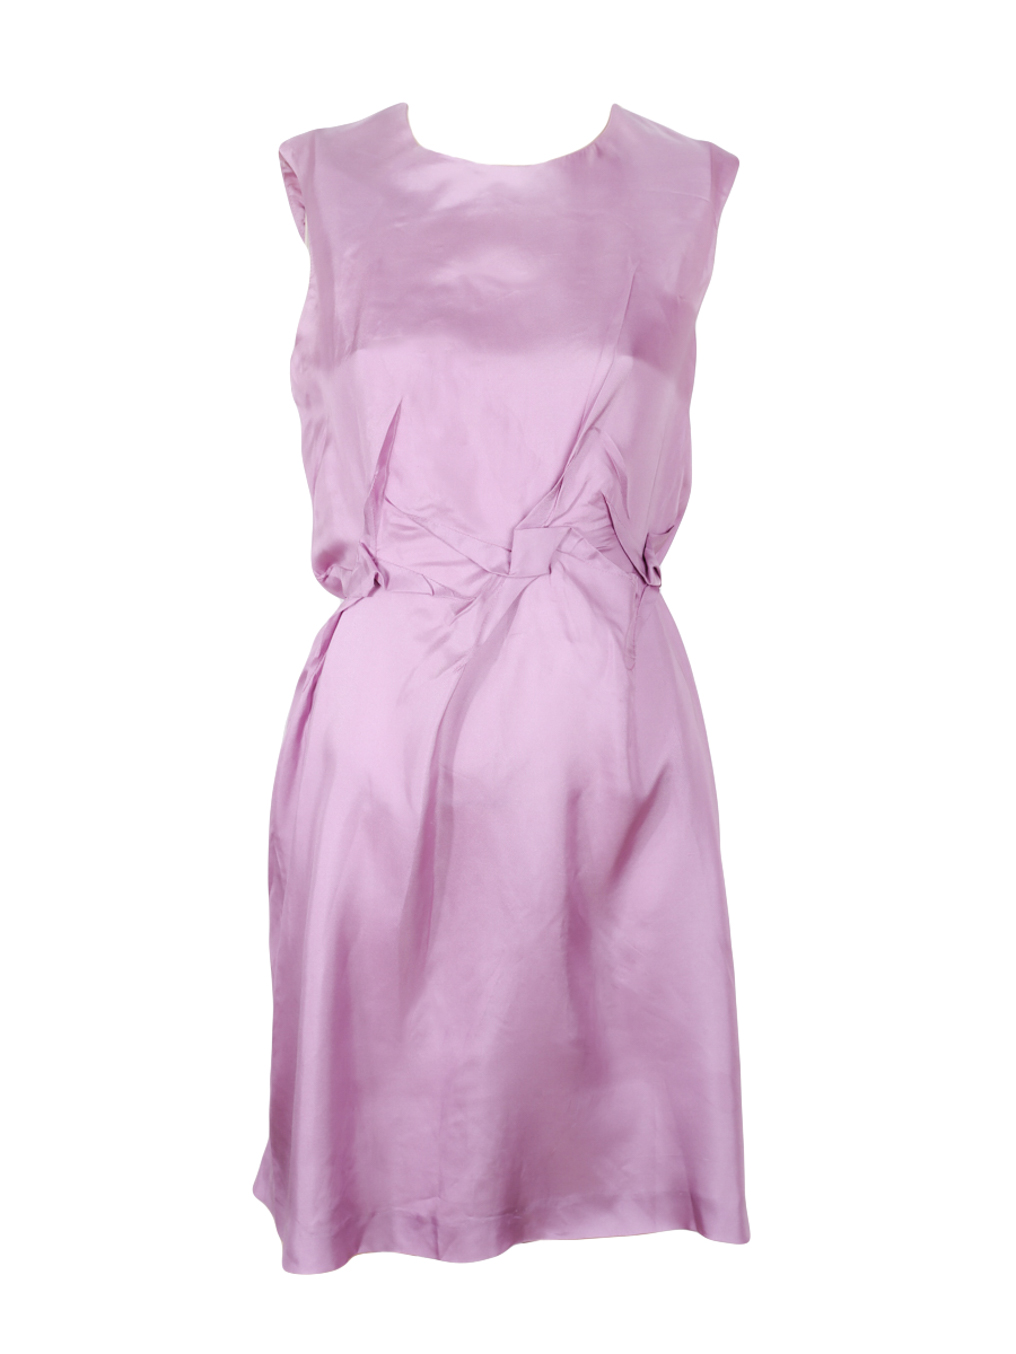 Yves Saint Laurent Silk Lavender Dress - Preowned